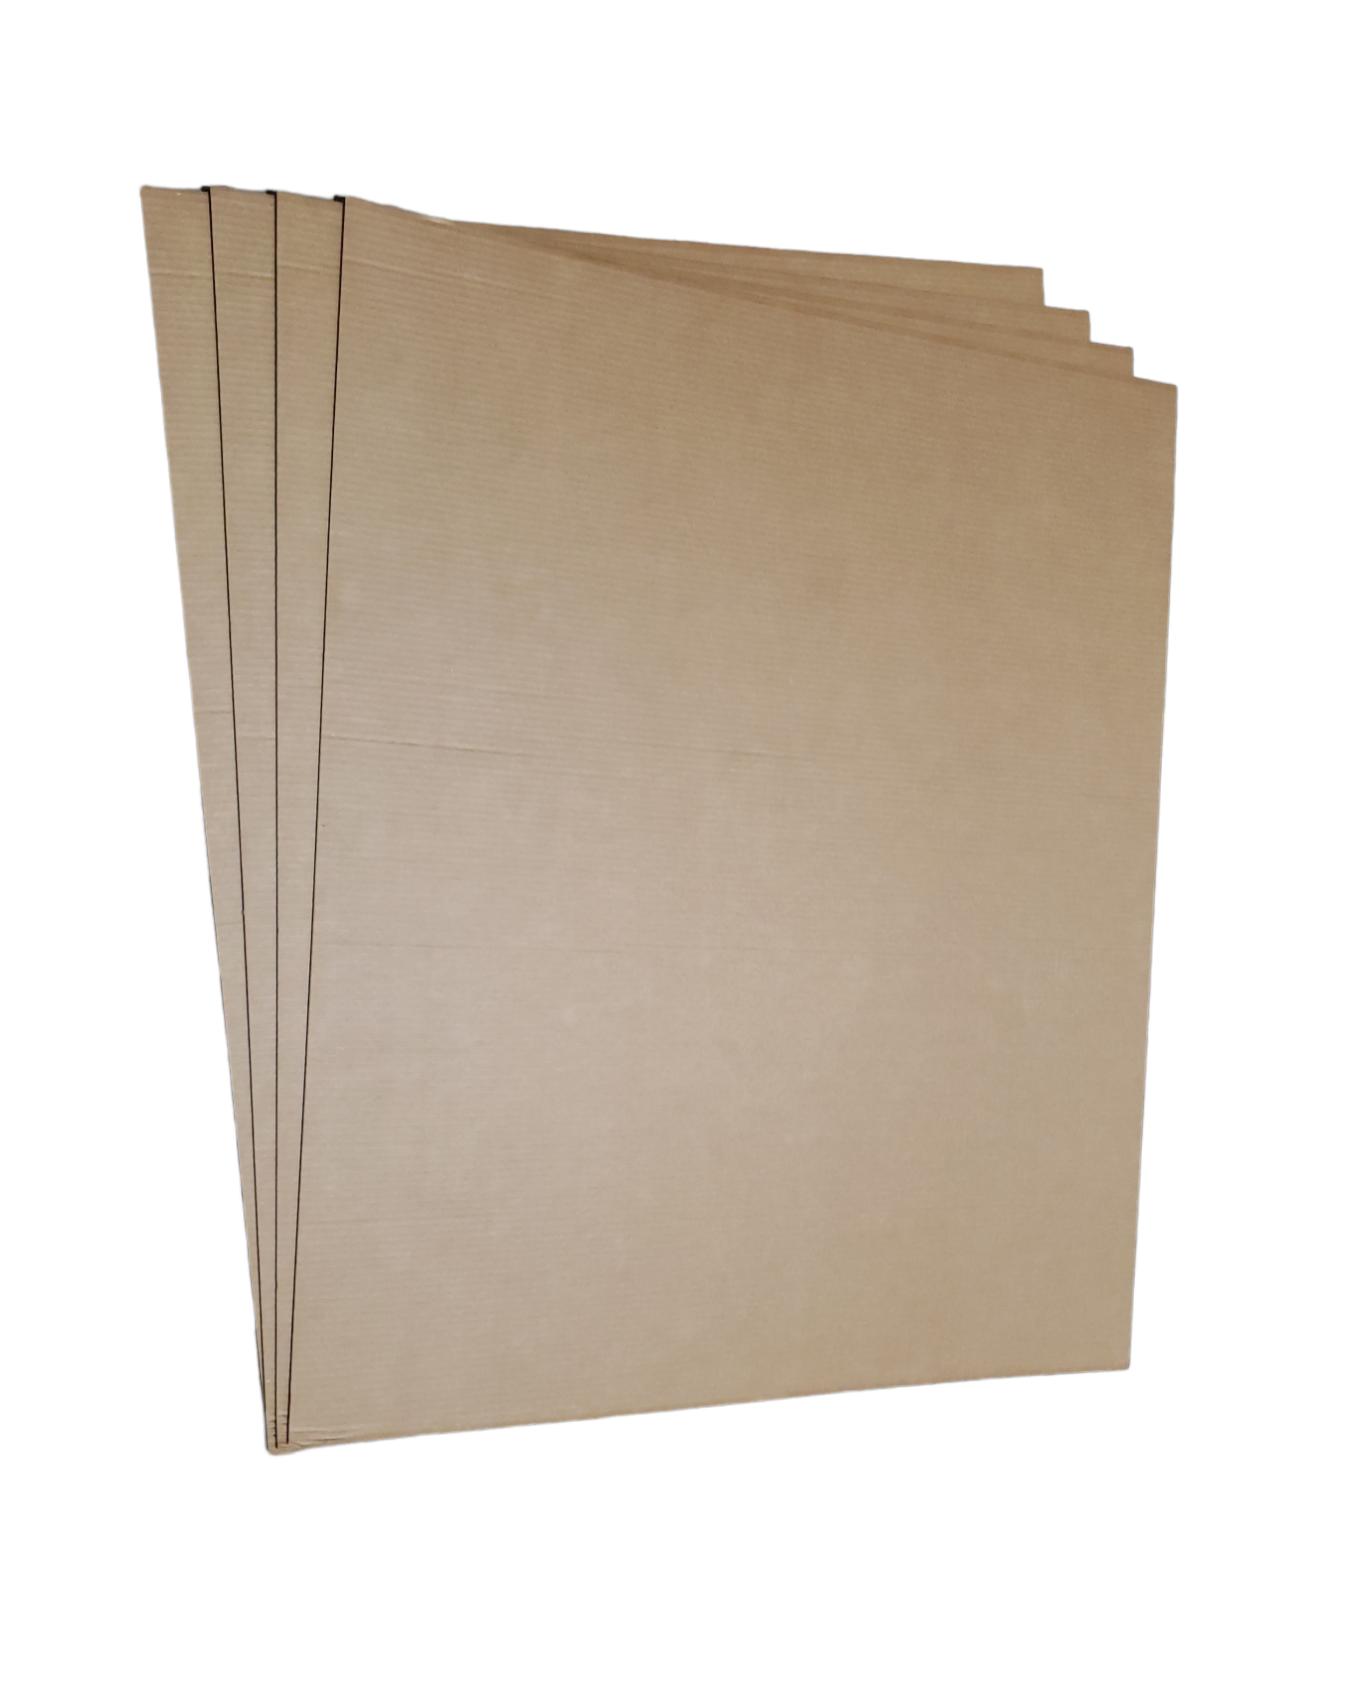 Corrugated Cardboard Sheets, Rolls & Pads